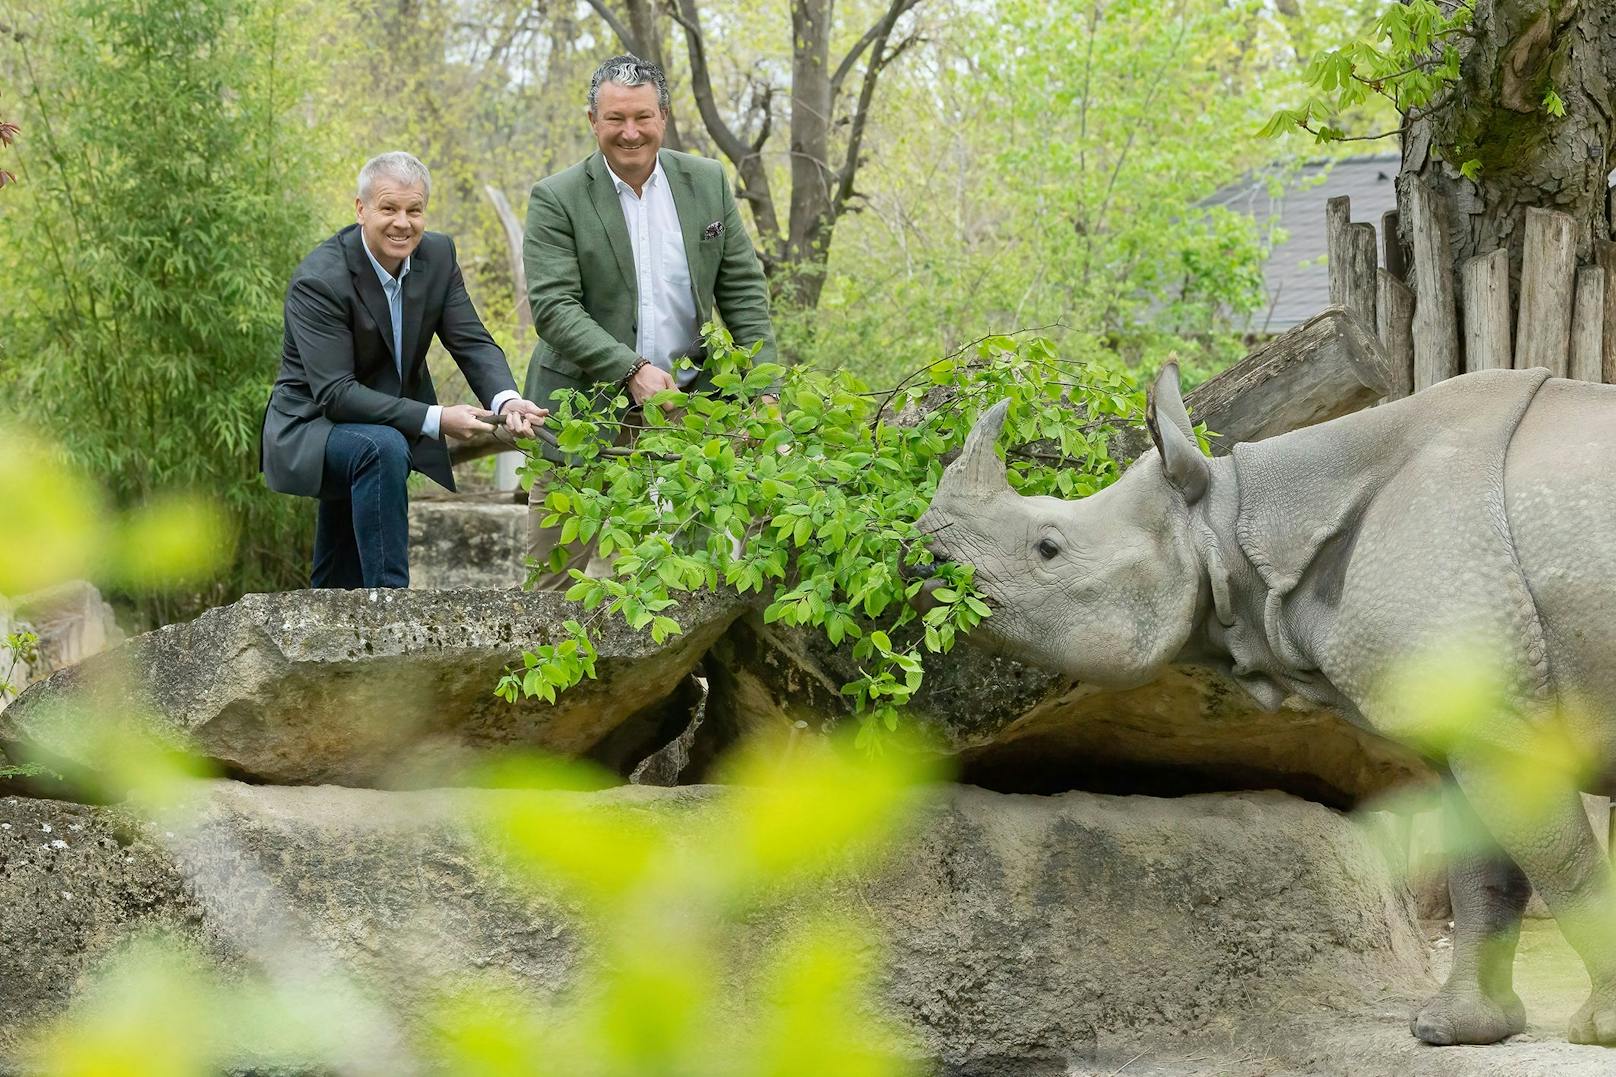 Blattwerk aus Wienerwald peppt Zoo-Speiseplan auf